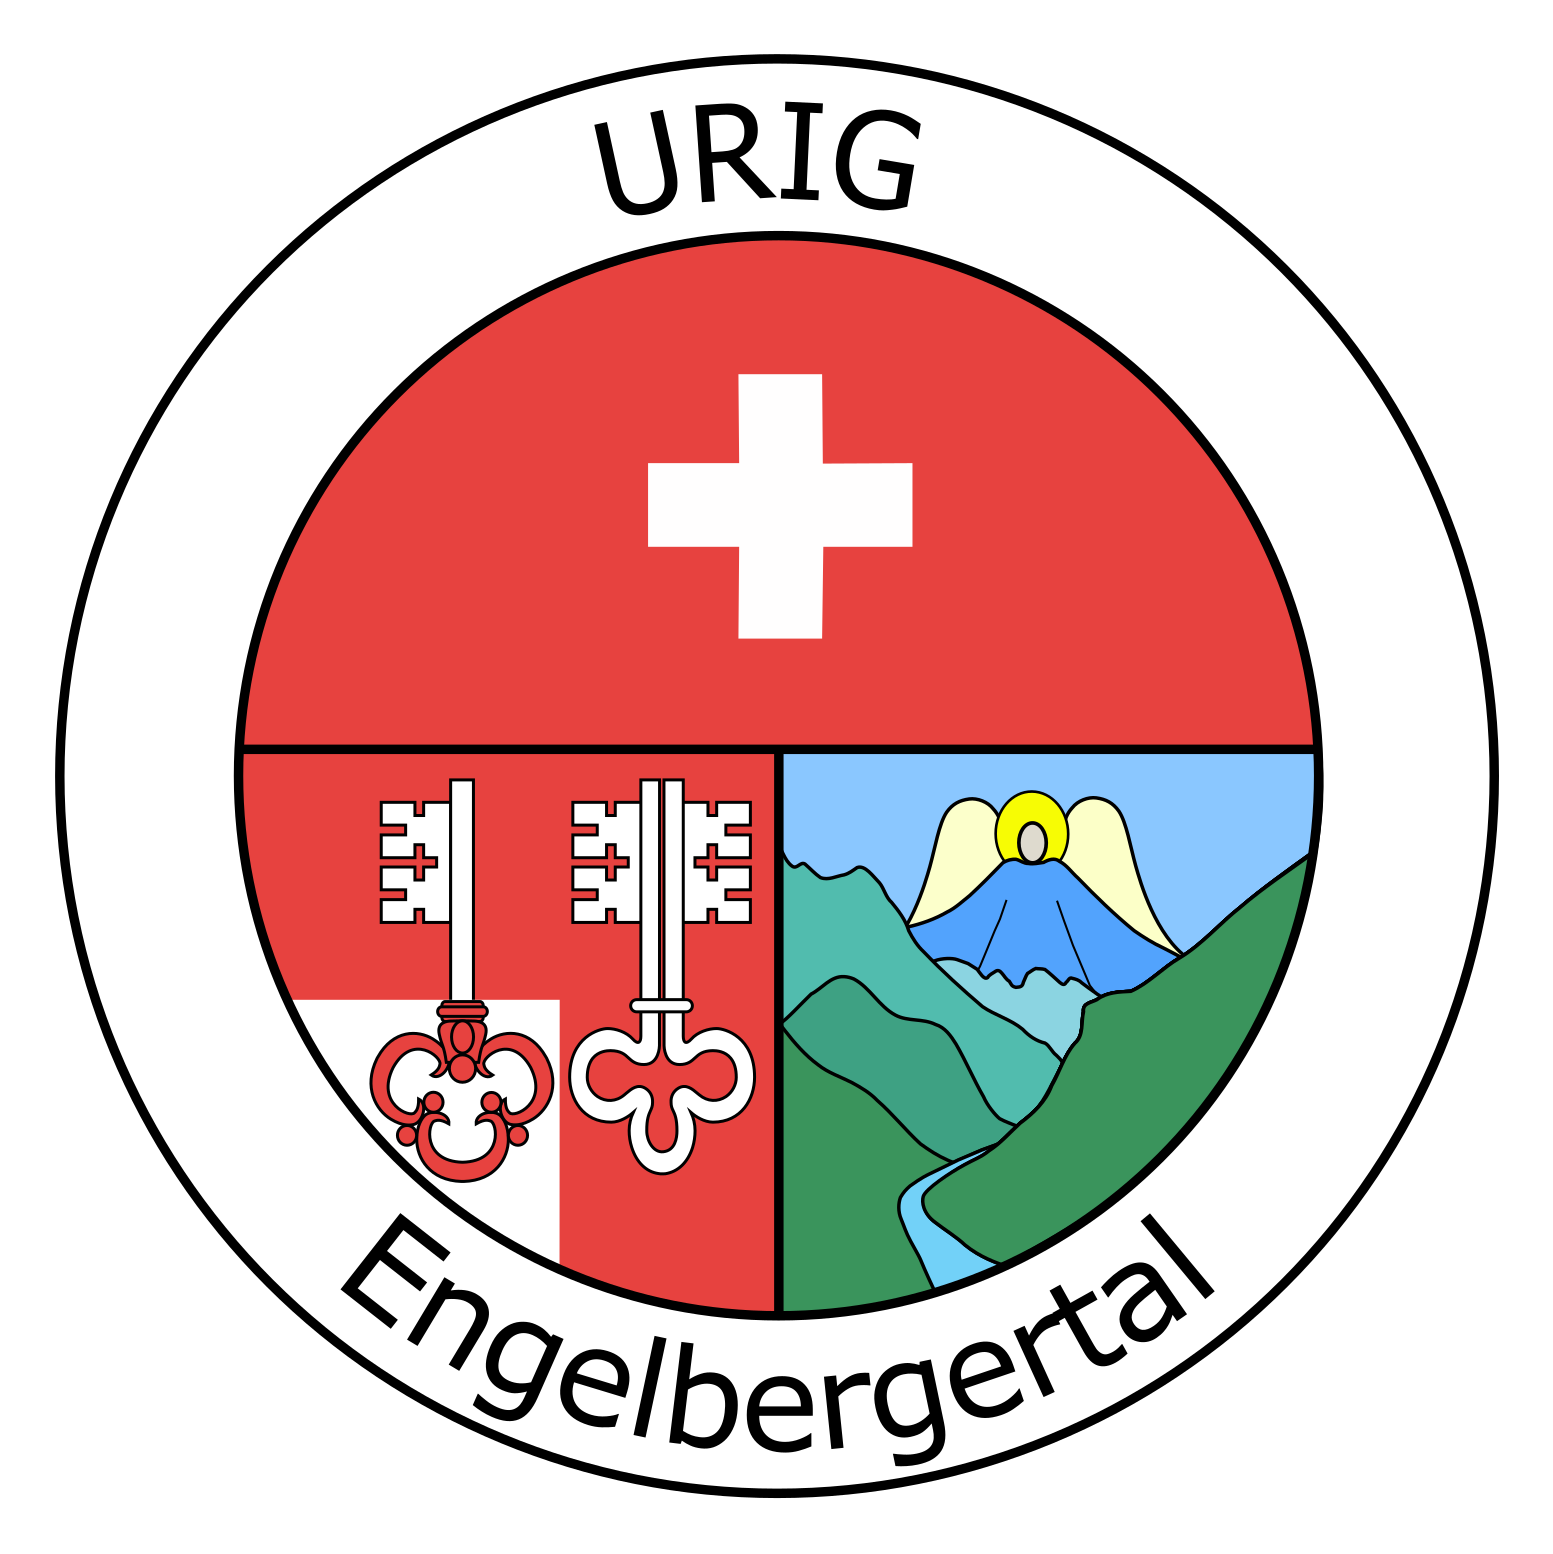 URIG Engelbergertal Logo frabig